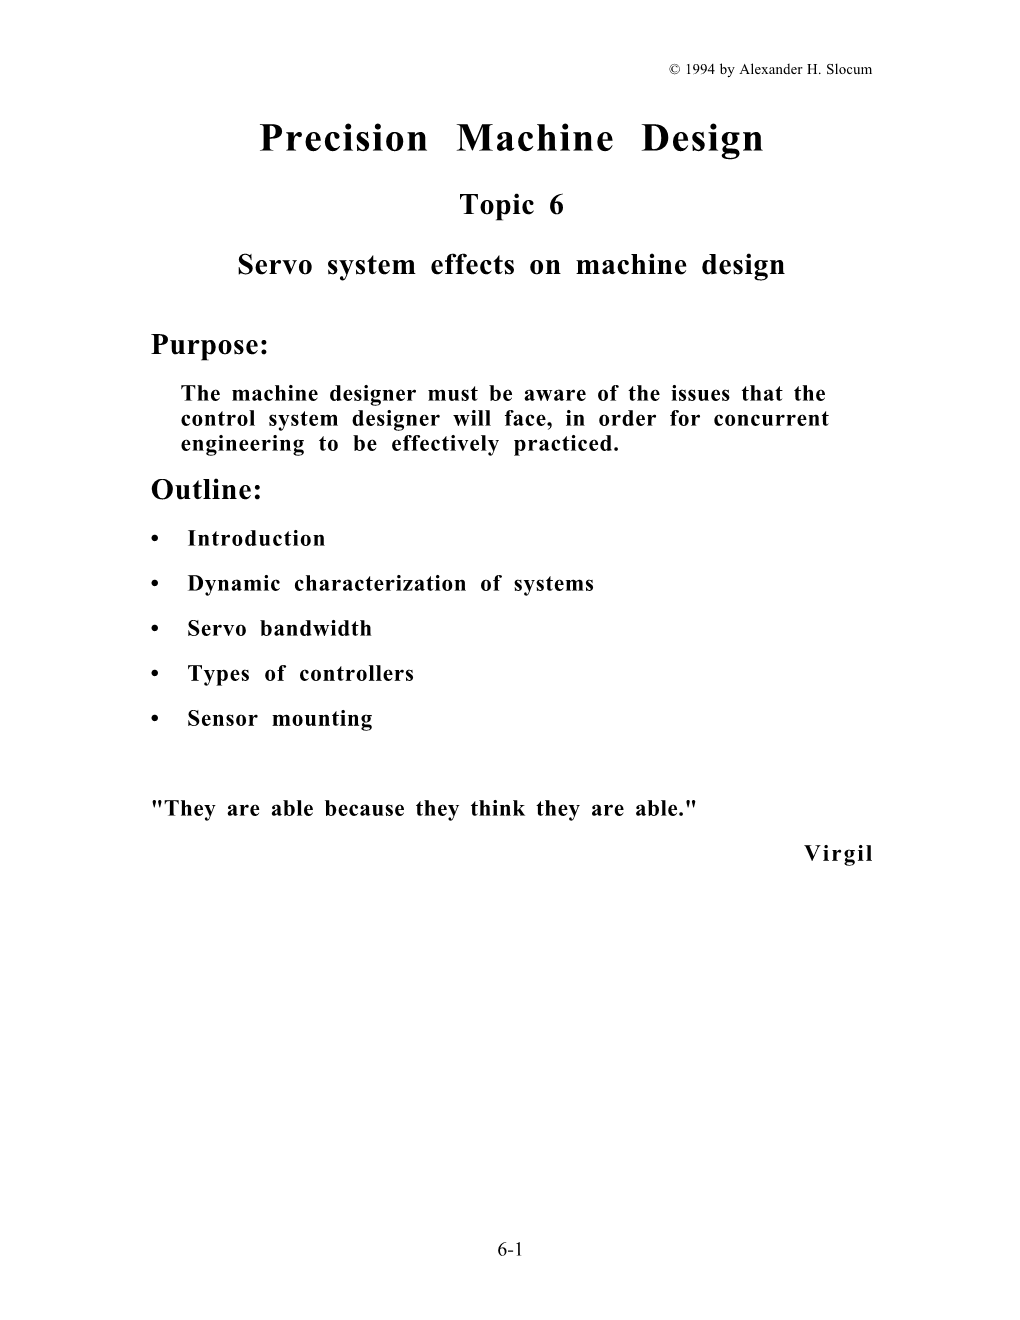 Topic 6 Servo System Effects on Machine Design Purpose